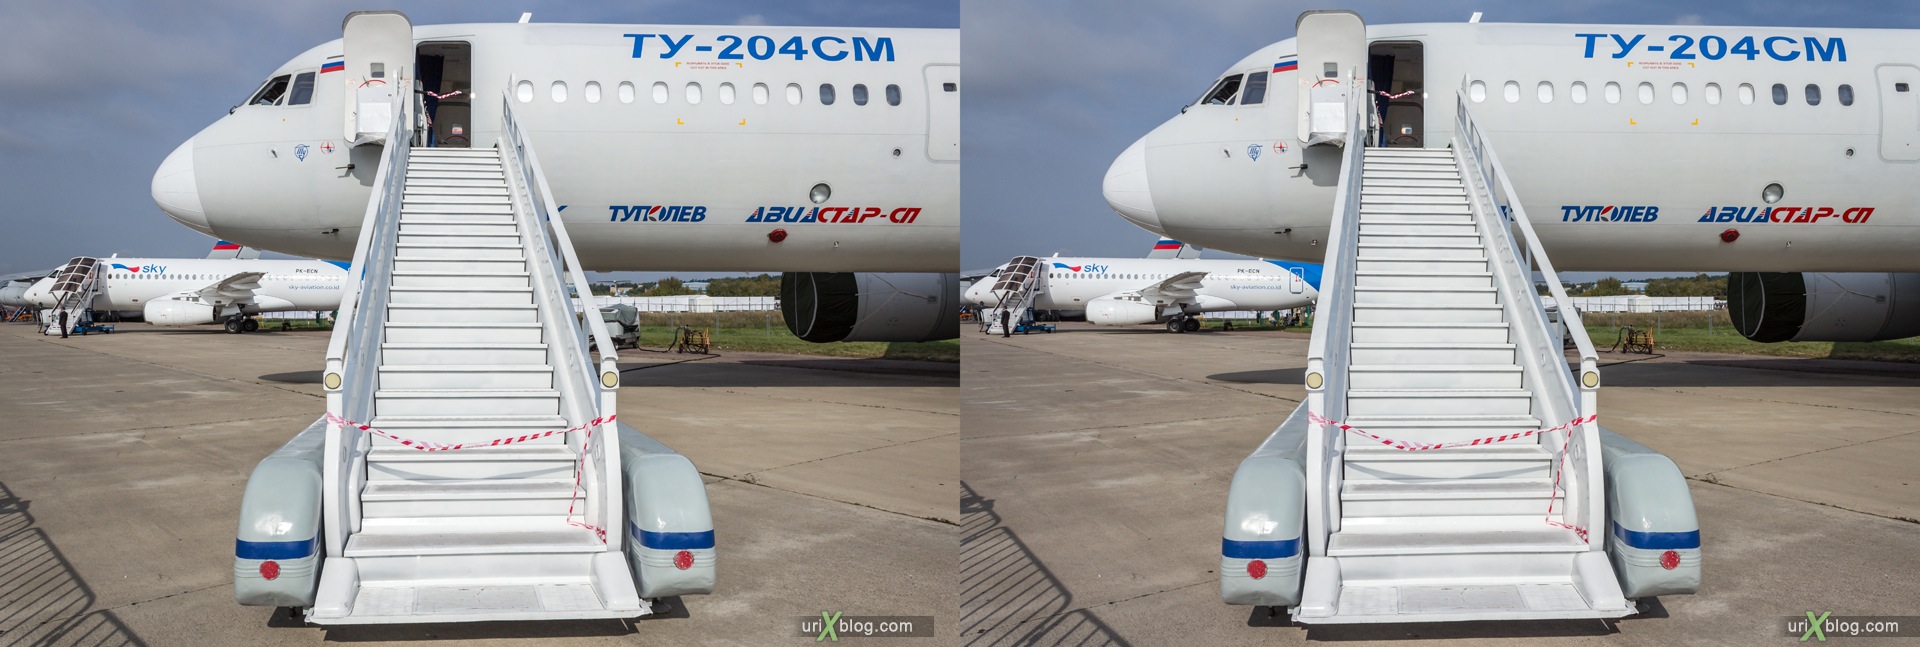 2013, Tu-204SM, MAKS, International Aviation and Space Salon, Russia, Ramenskoye airfield, airplane, 3D, stereo pair, cross-eyed, crossview, cross view stereo pair, stereoscopic